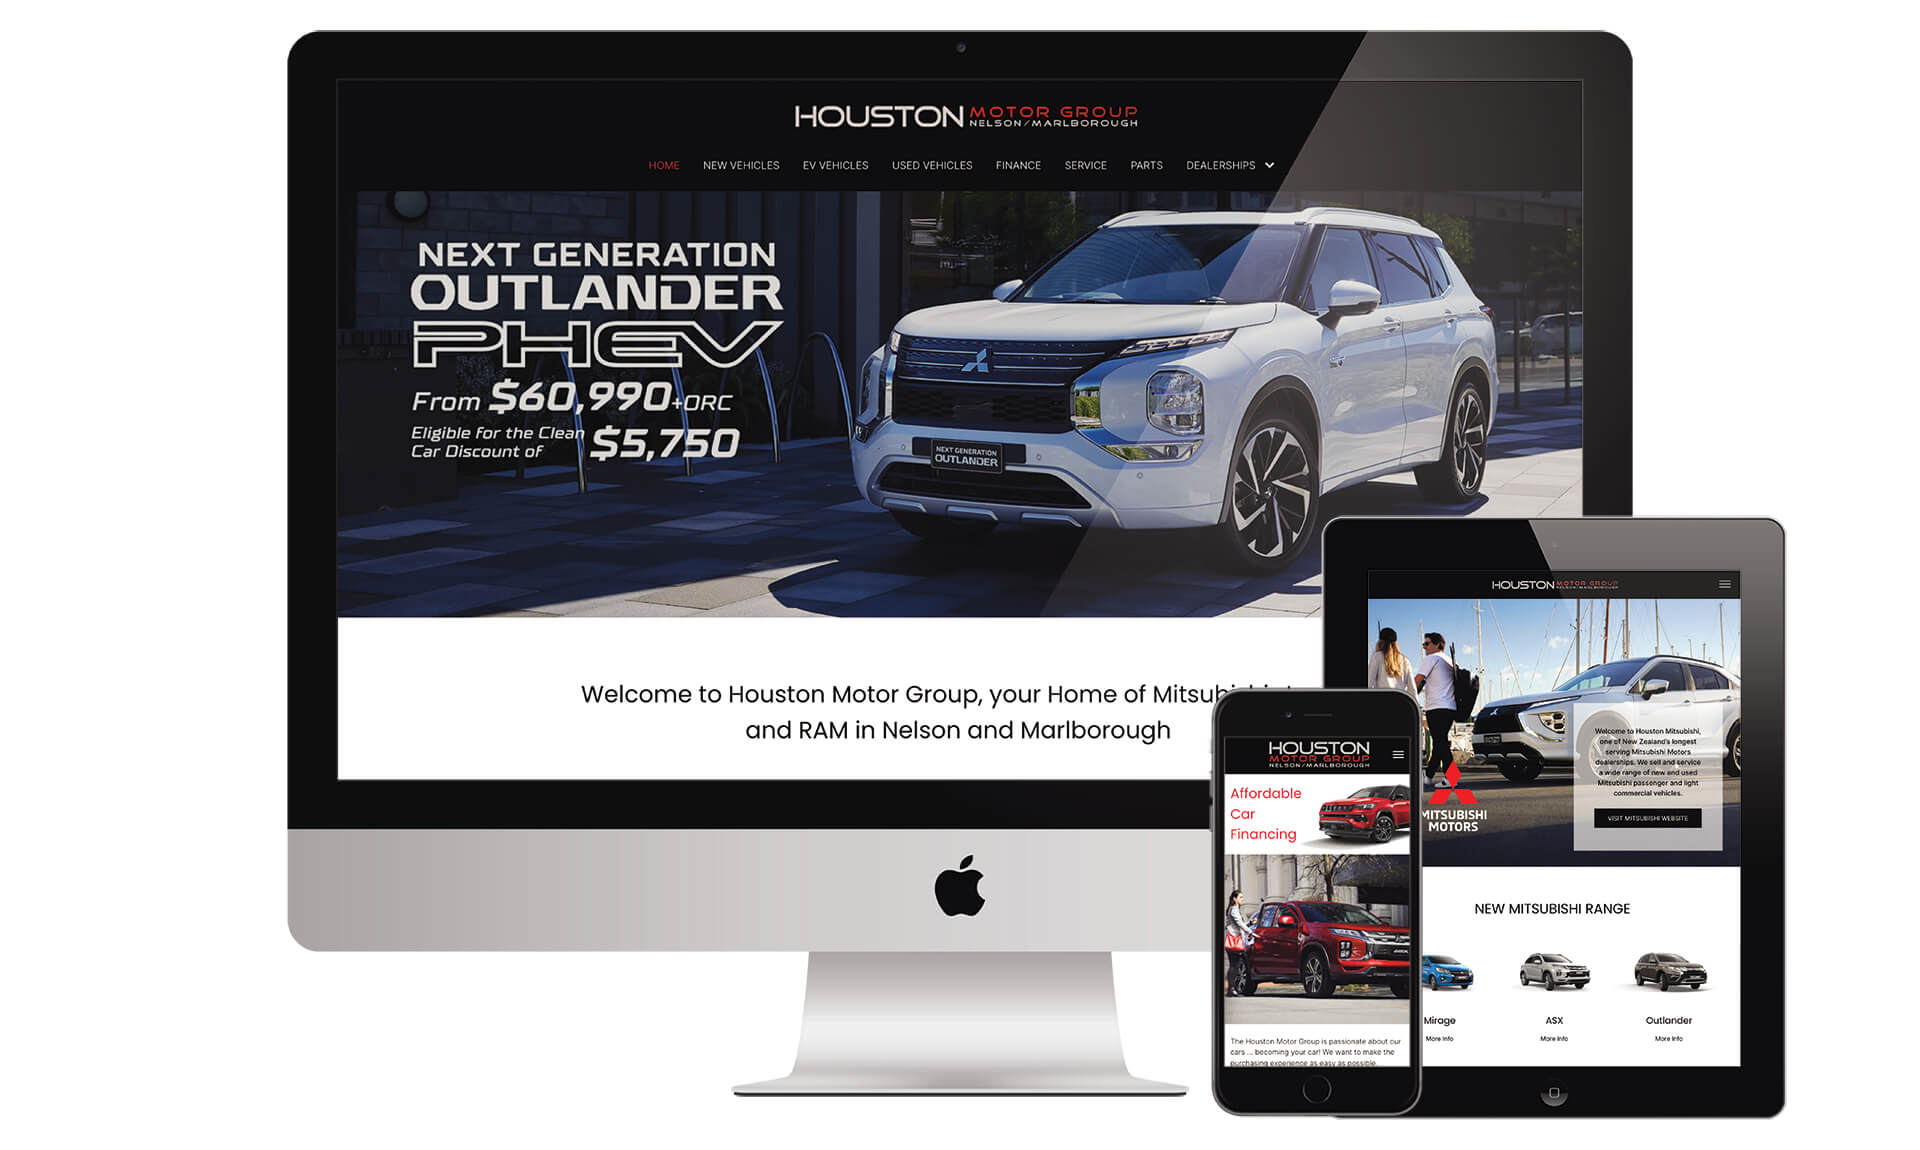 Houston Motor Group website designed by Vanilla Hayes creative graphic design  studio in Blenheim, Marlborough, New Zealand